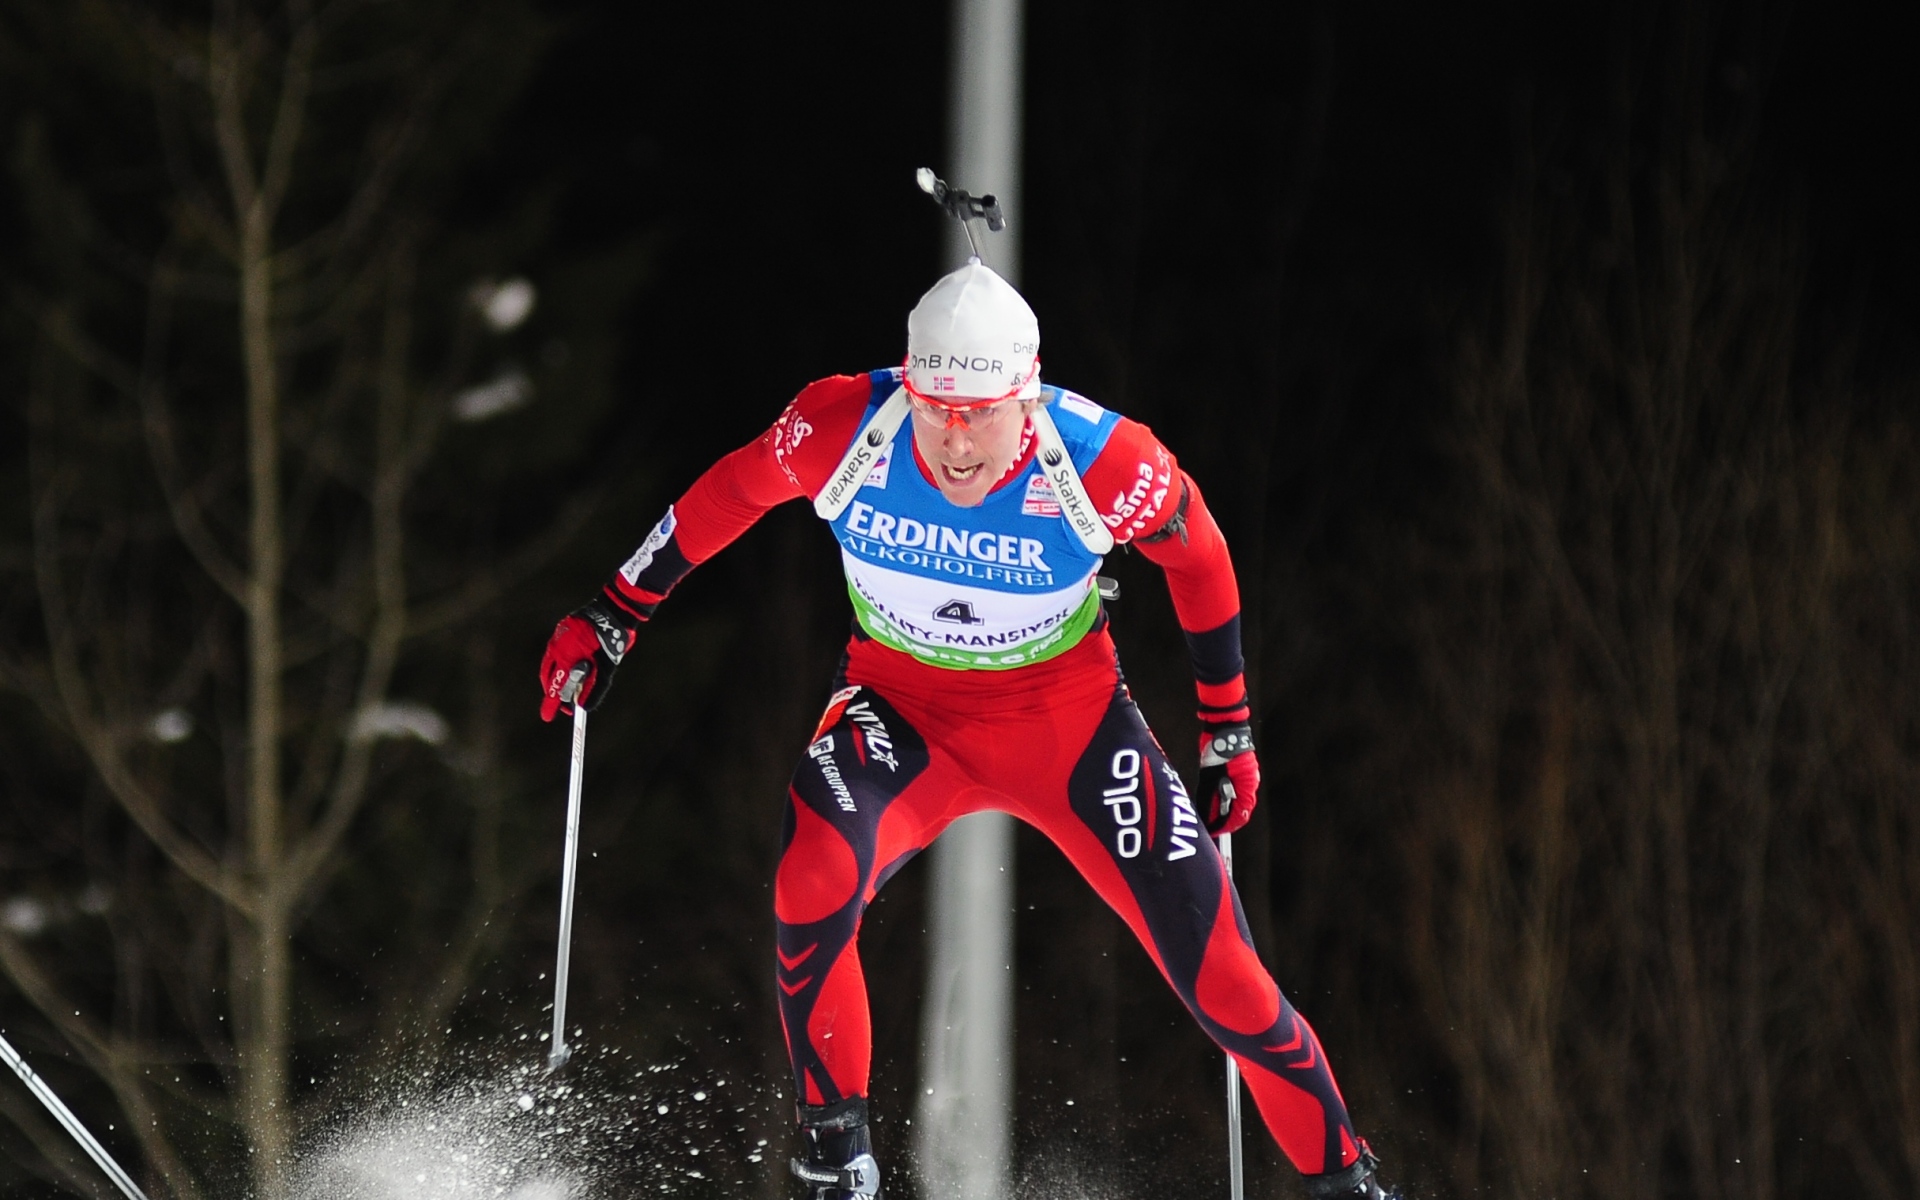 Картинки Emil hegle svendsen, норвежский биатлонист, чемпион мира, суперсвендэн фото и обои на рабочий стол